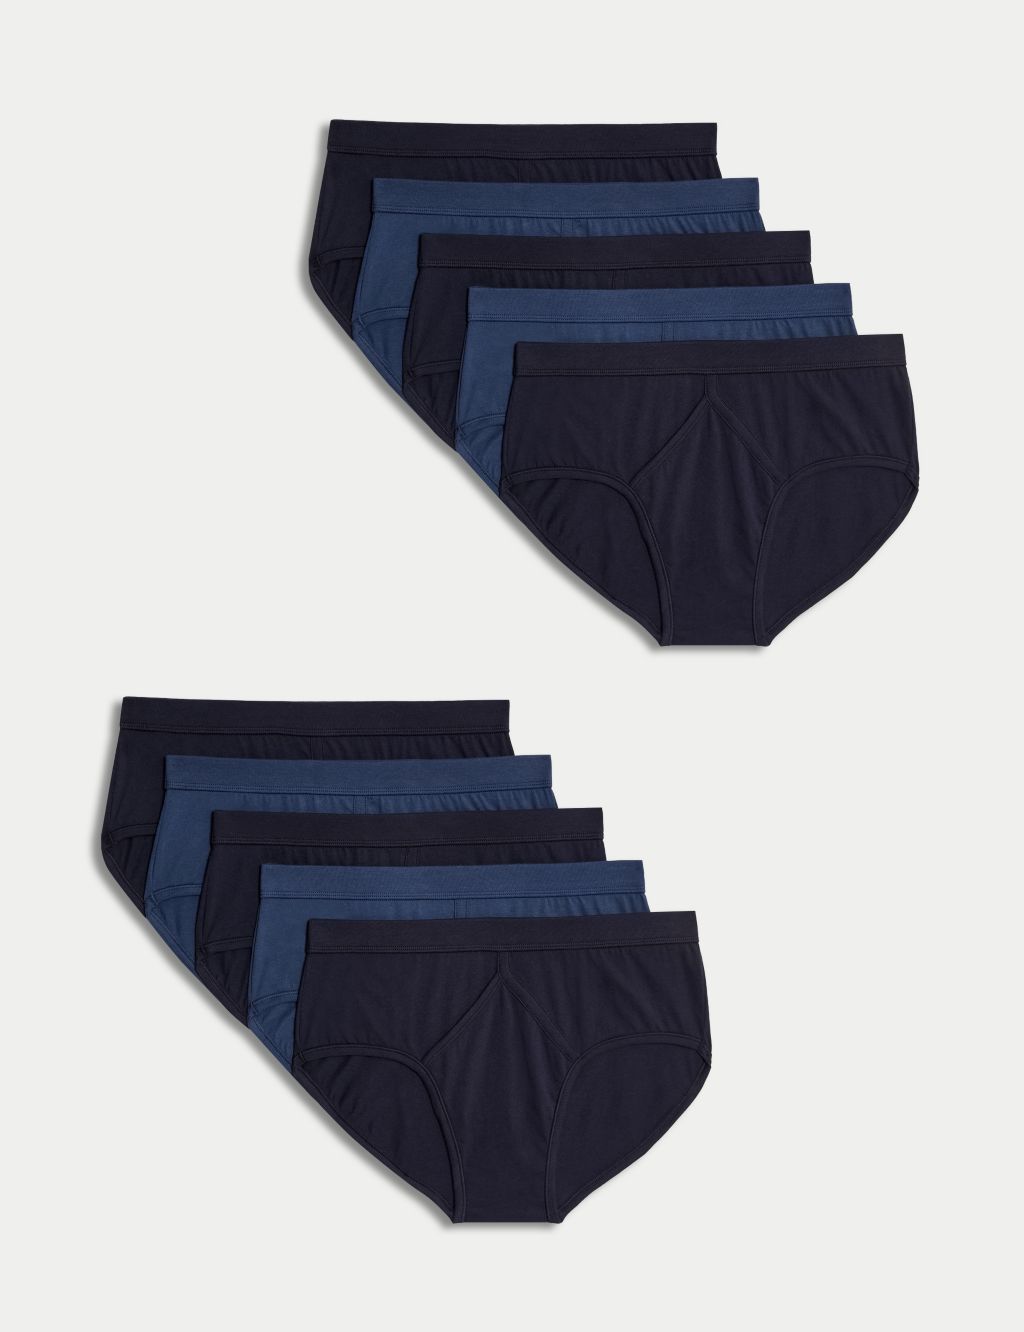 Jockey mens Navy Blue cotton stretch thong underwear India